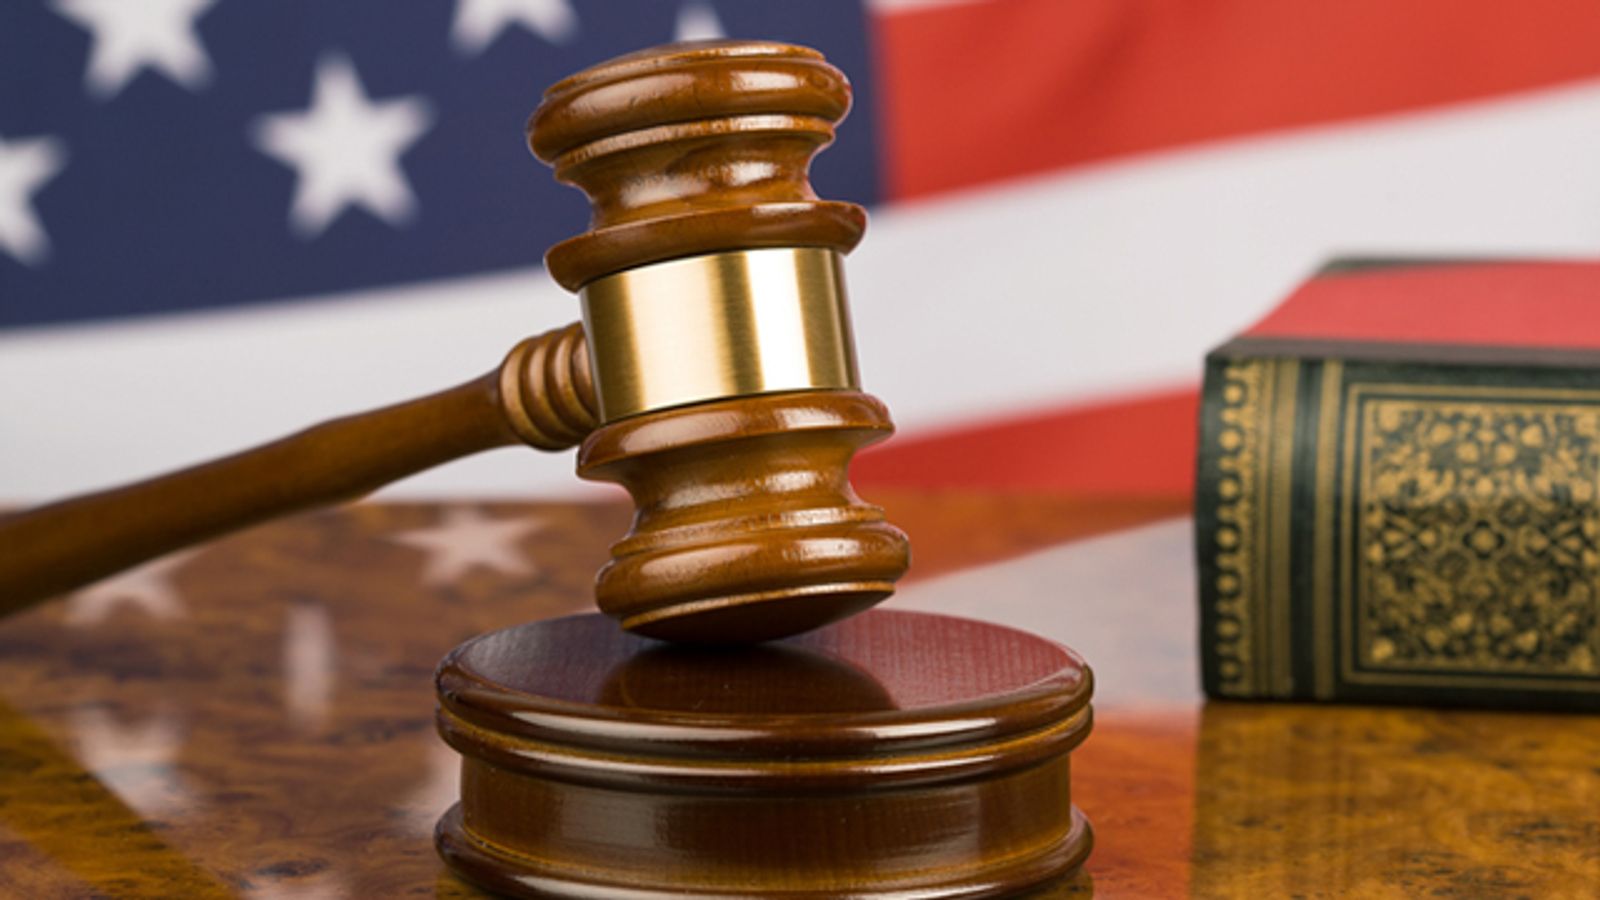 Analysis: First Amendment Jurisprudence By Gut Check